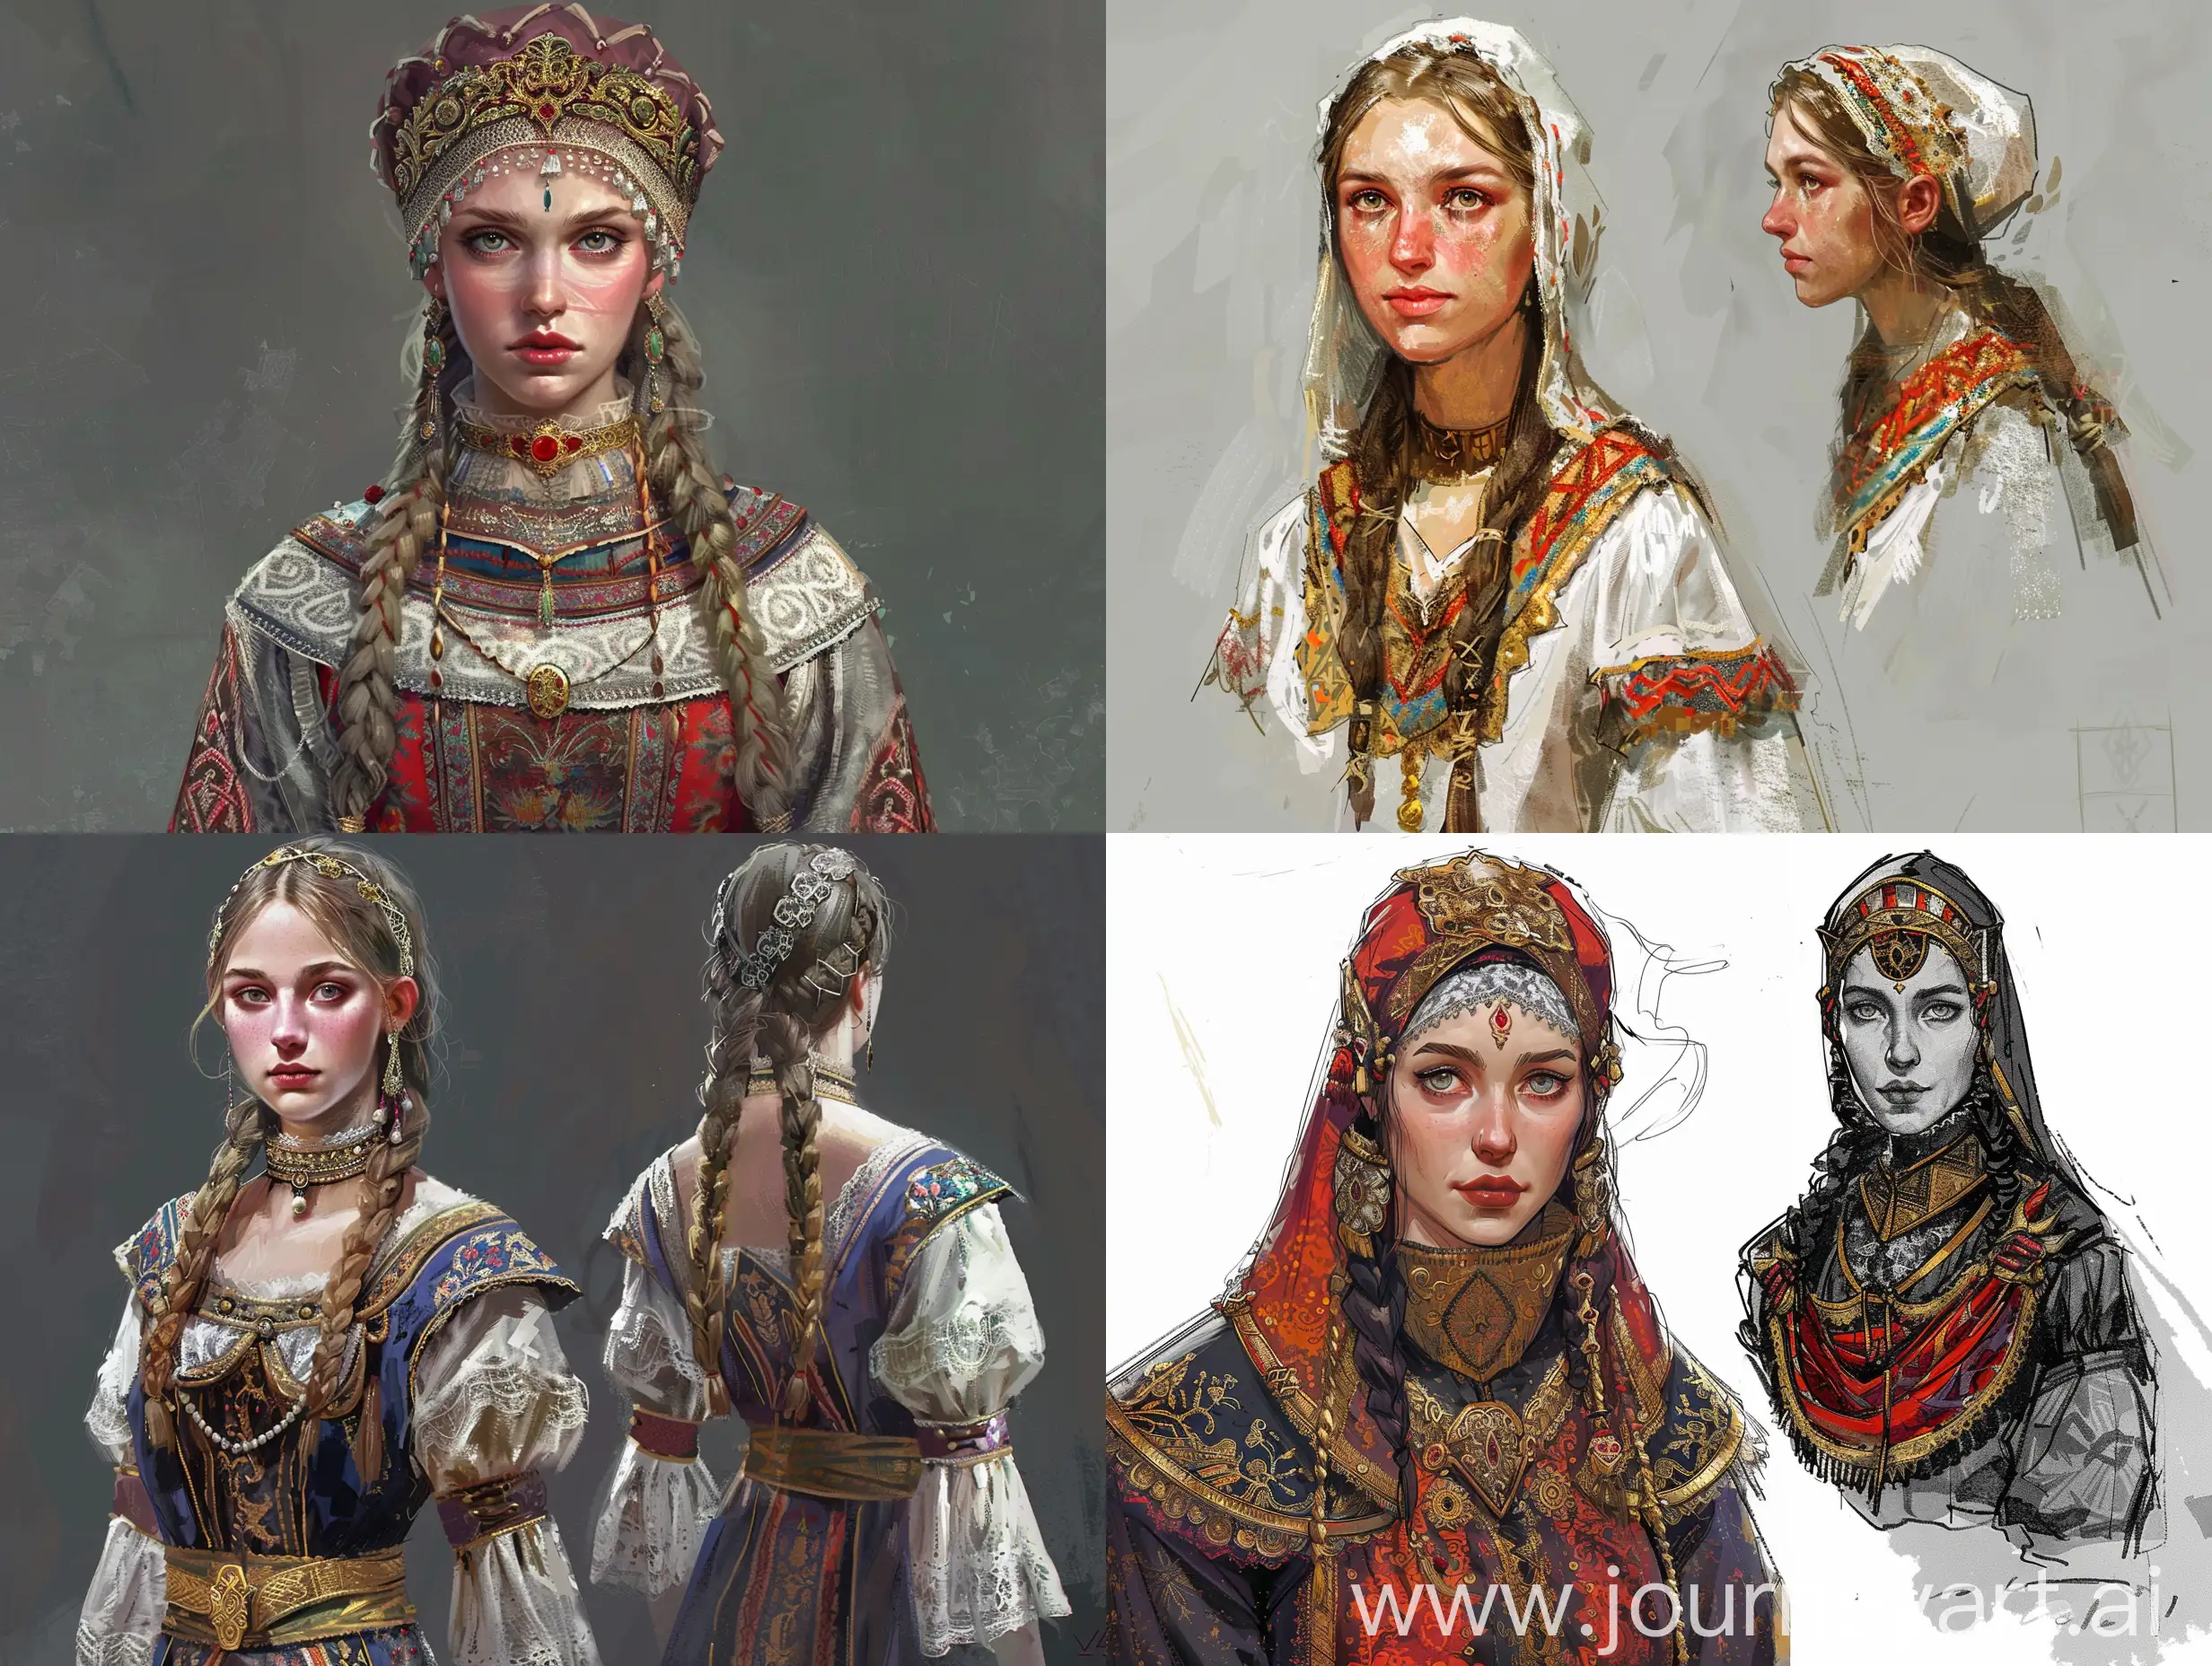 concept art of Vasilisa the Beautiful, the main character of the game in the Slavic setting in the genre of souls-like in kokoshnik